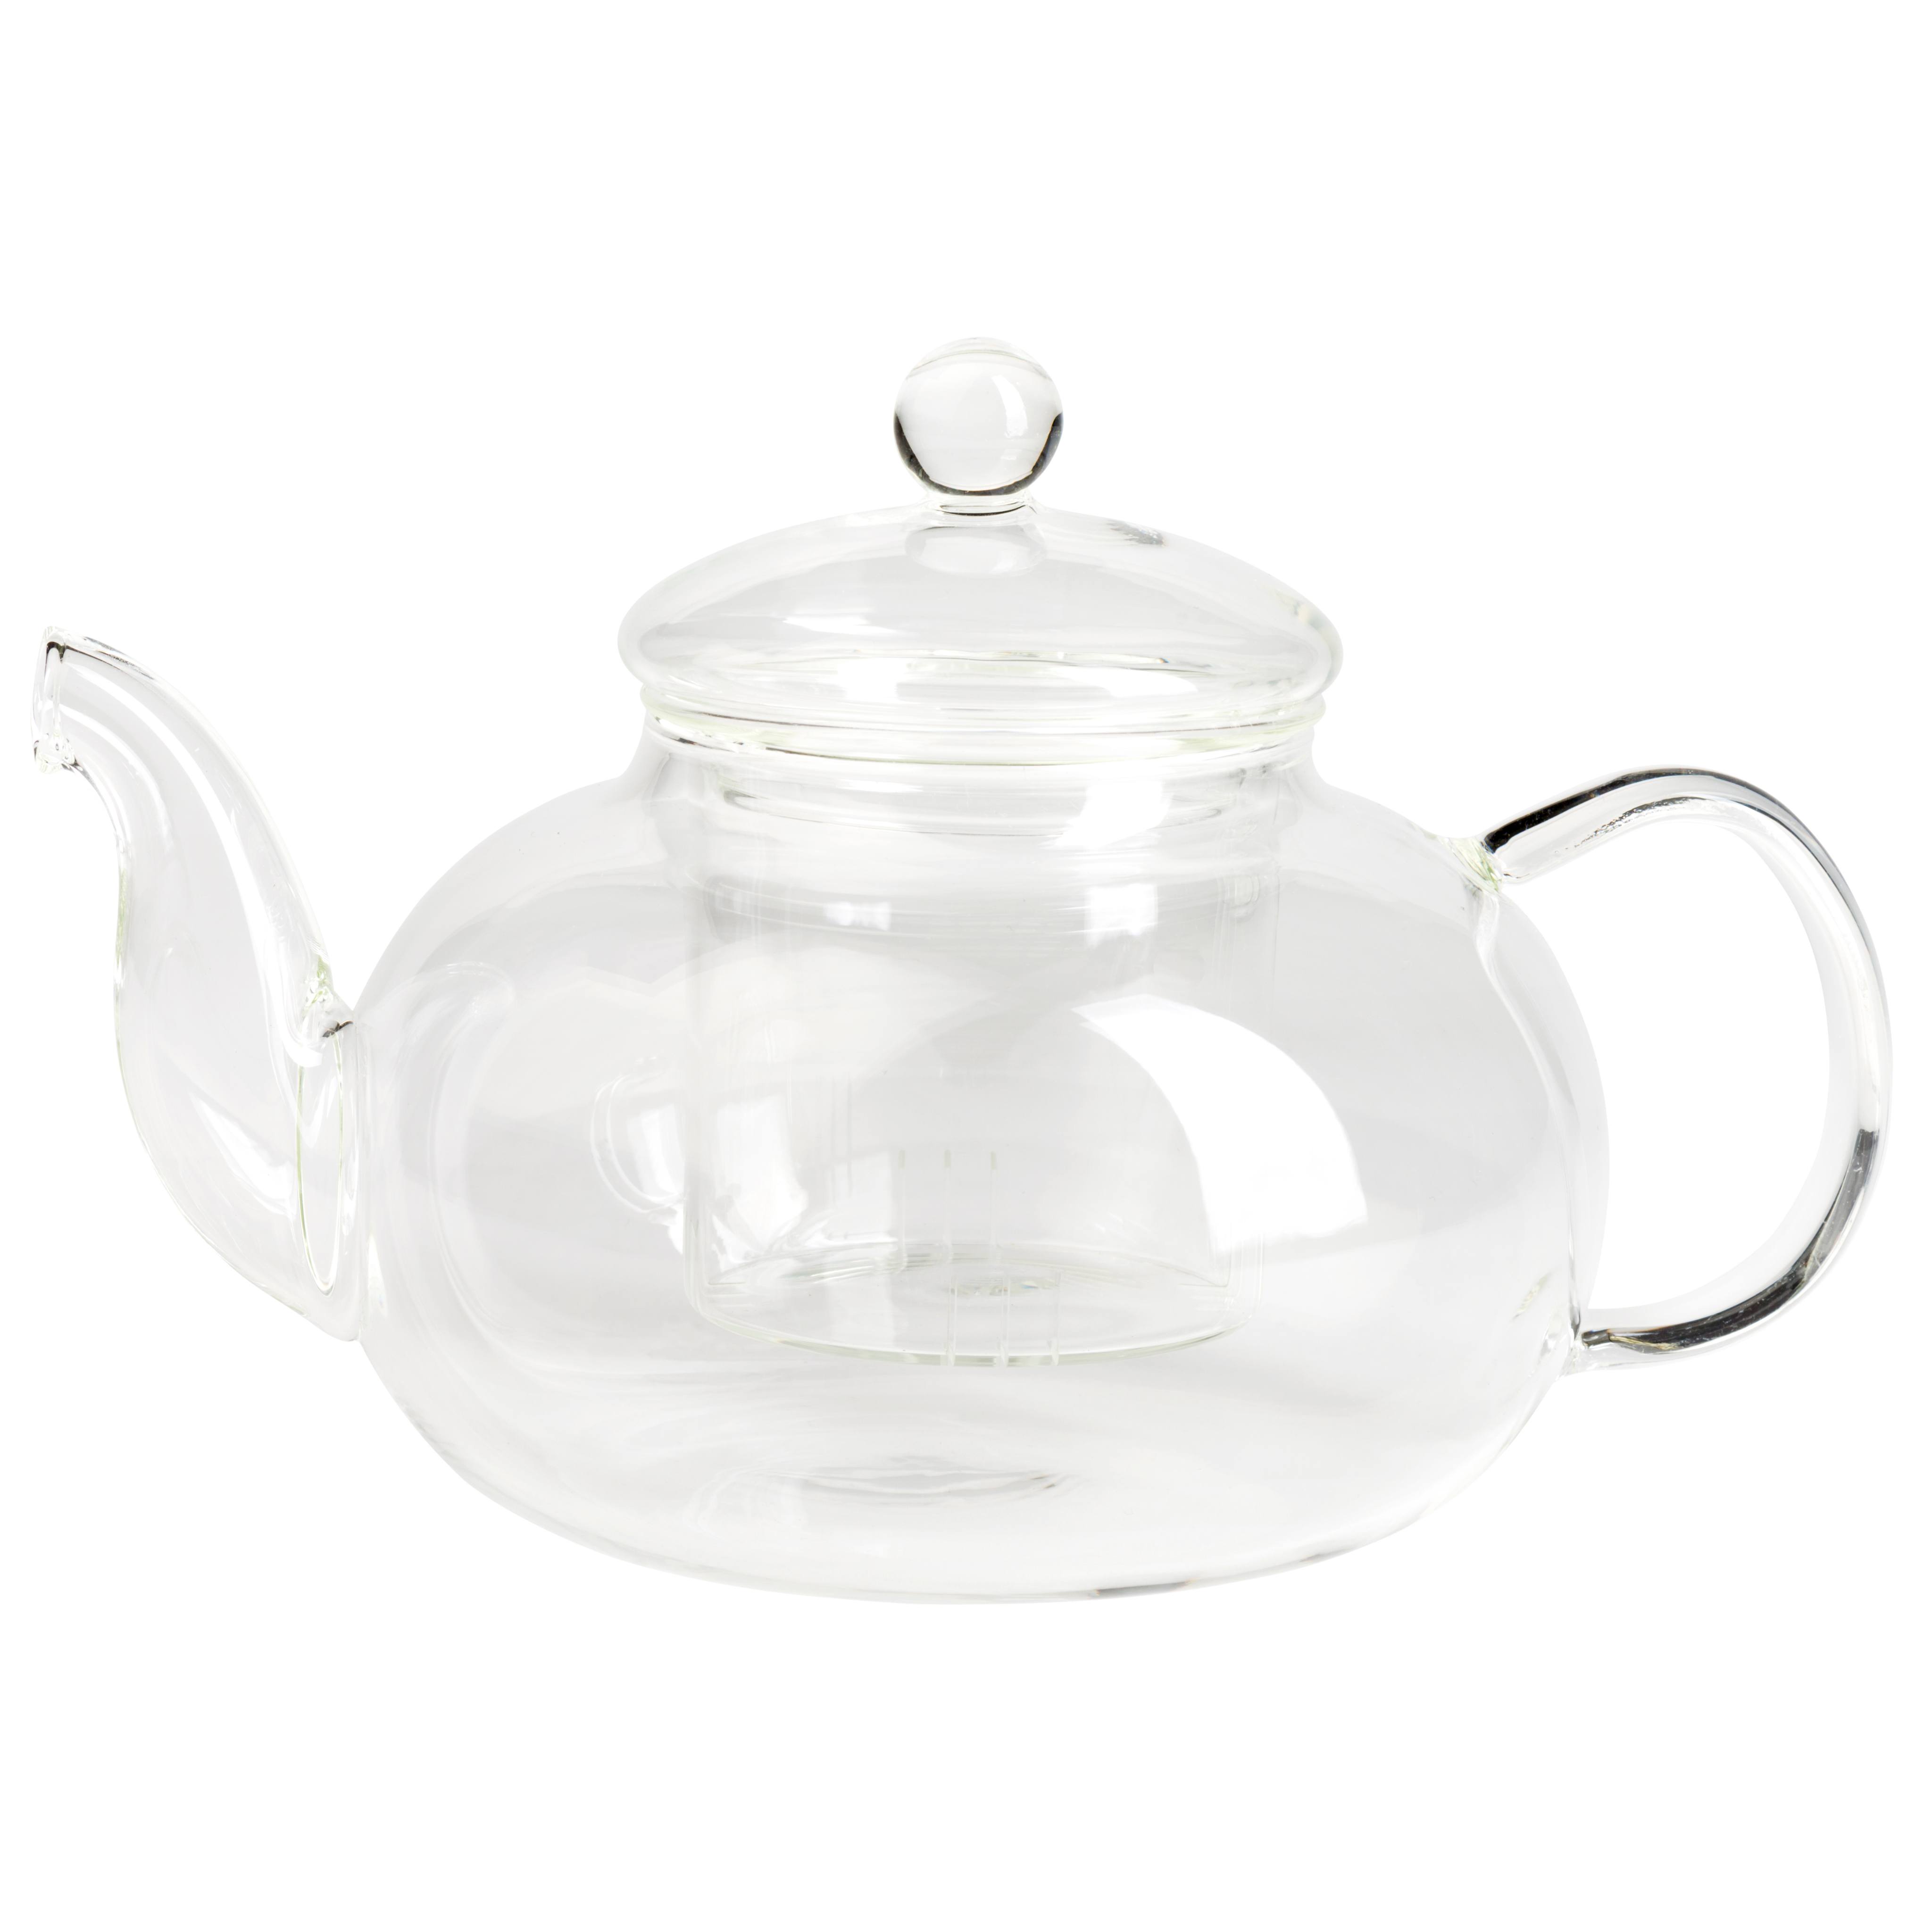 advertise Honest Antagonize glass teapot Fruity swear Sense of guilt